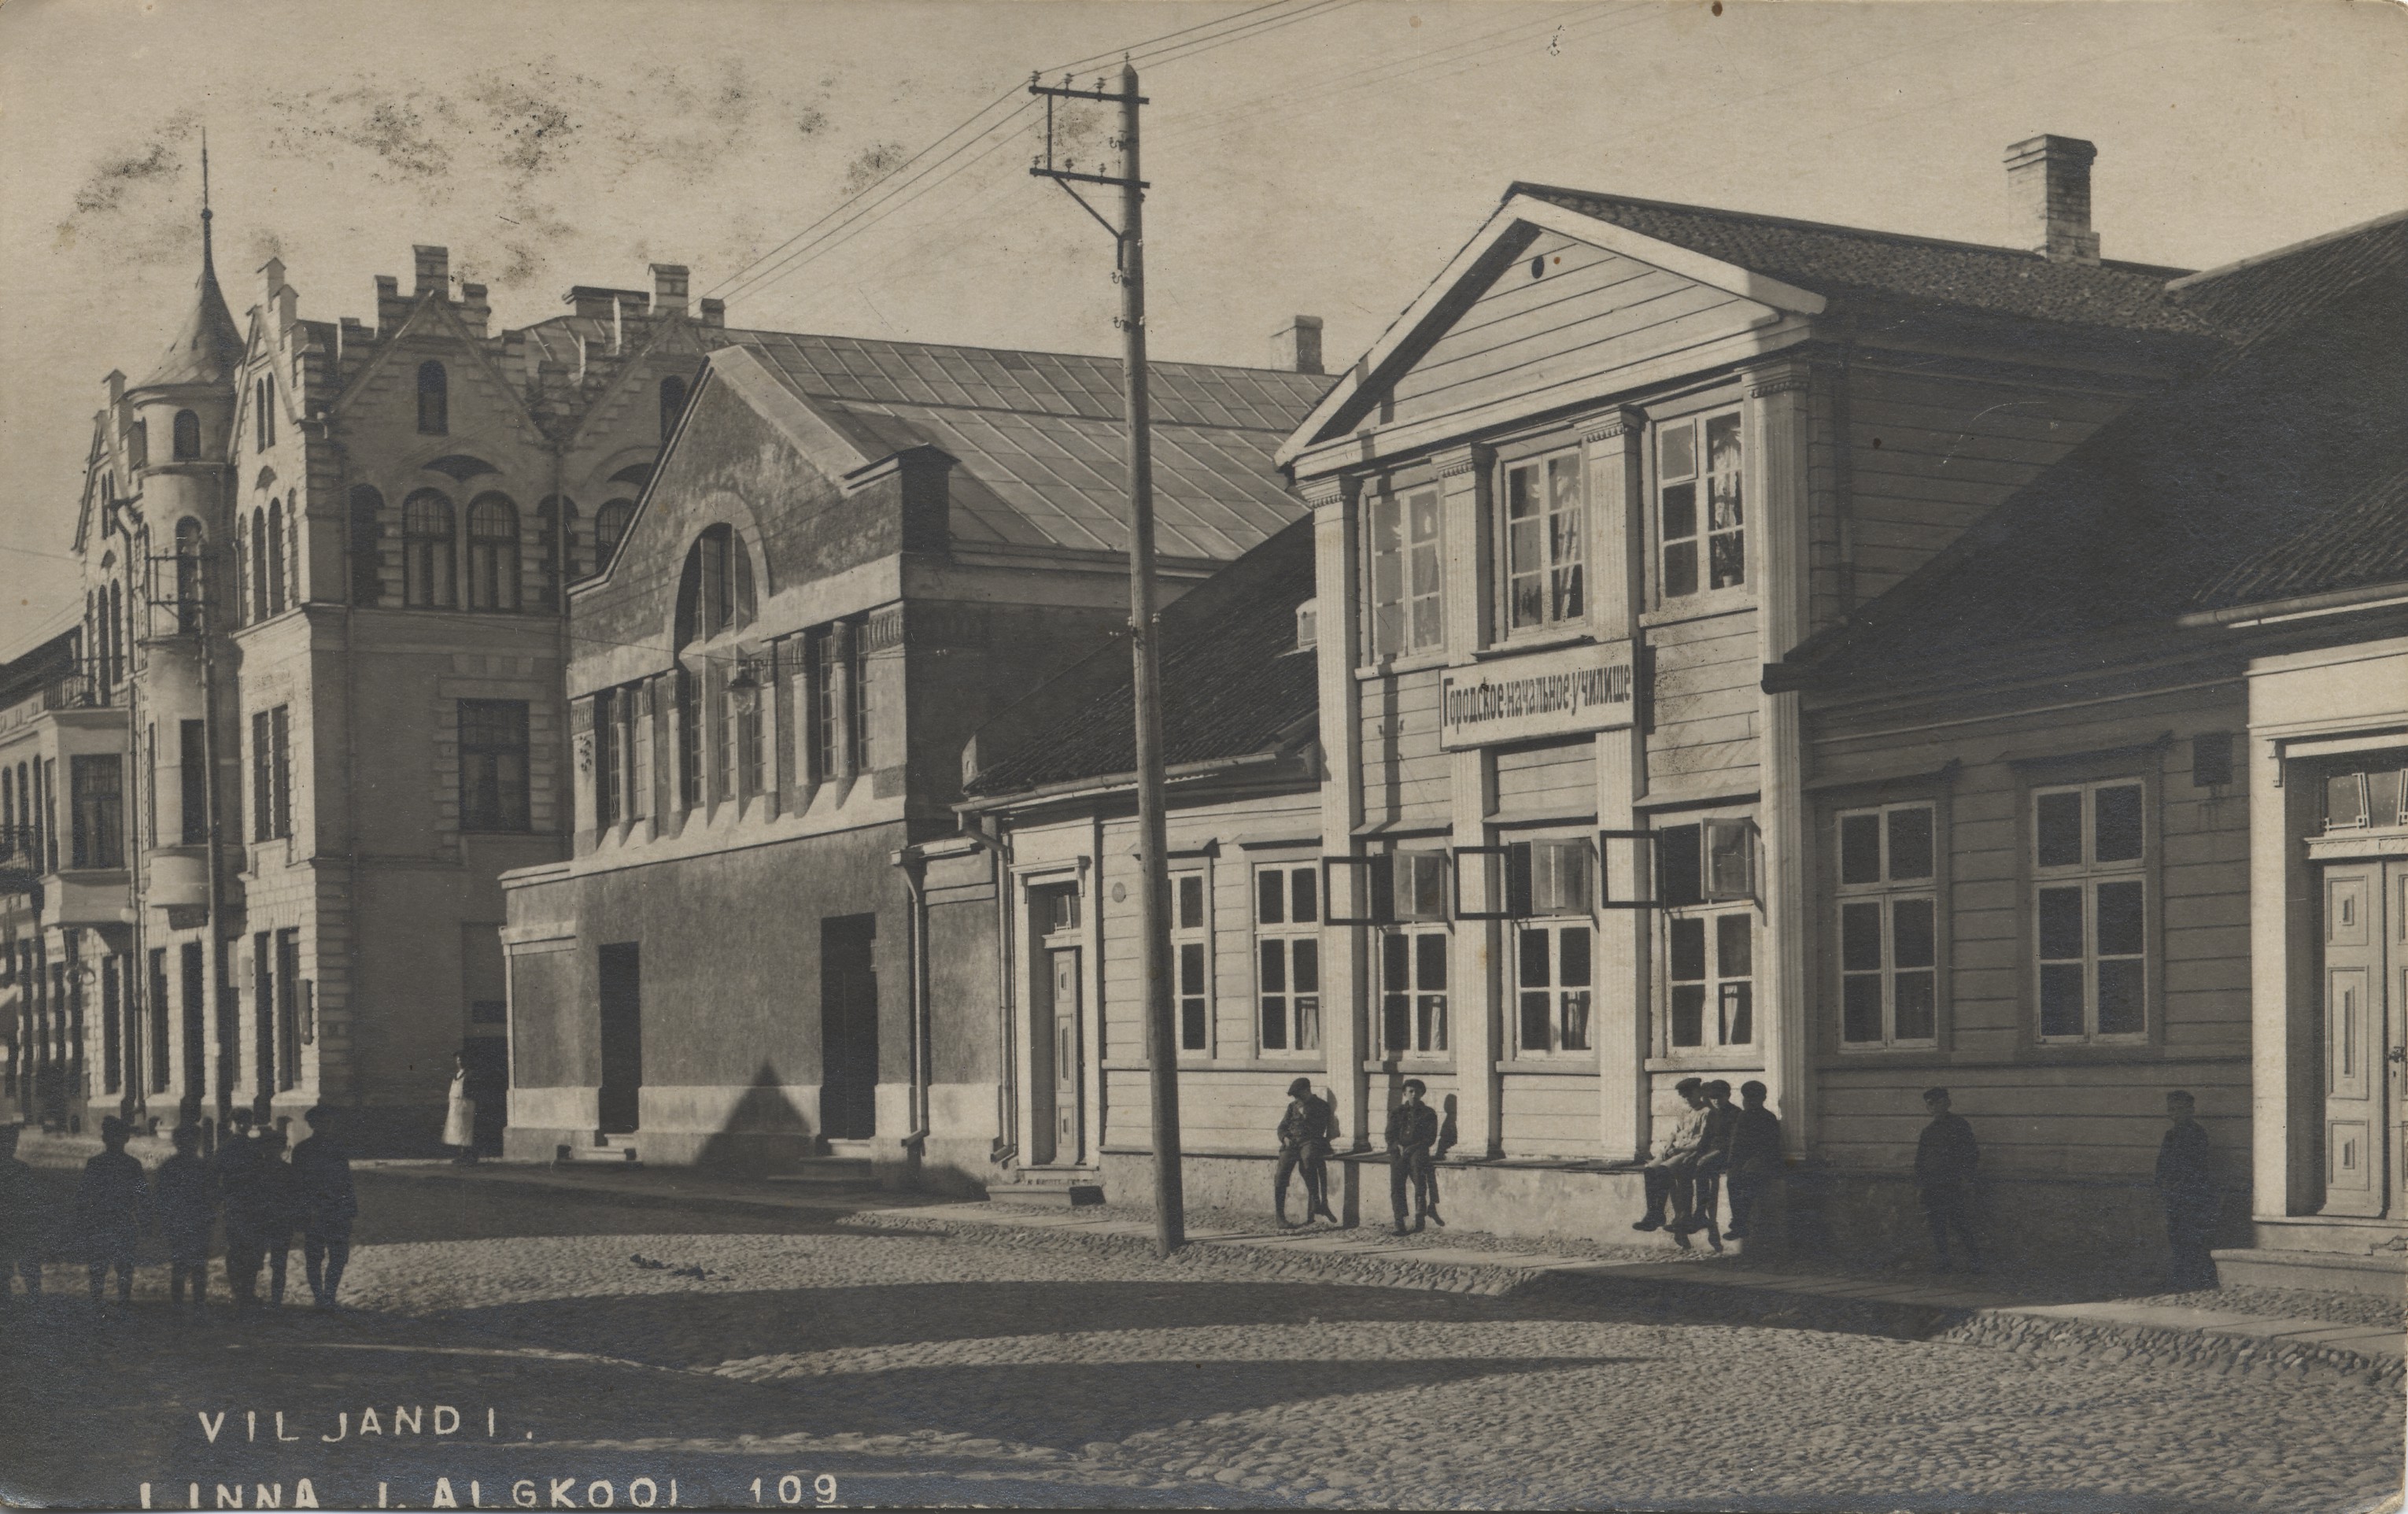 First school in Viljandi City